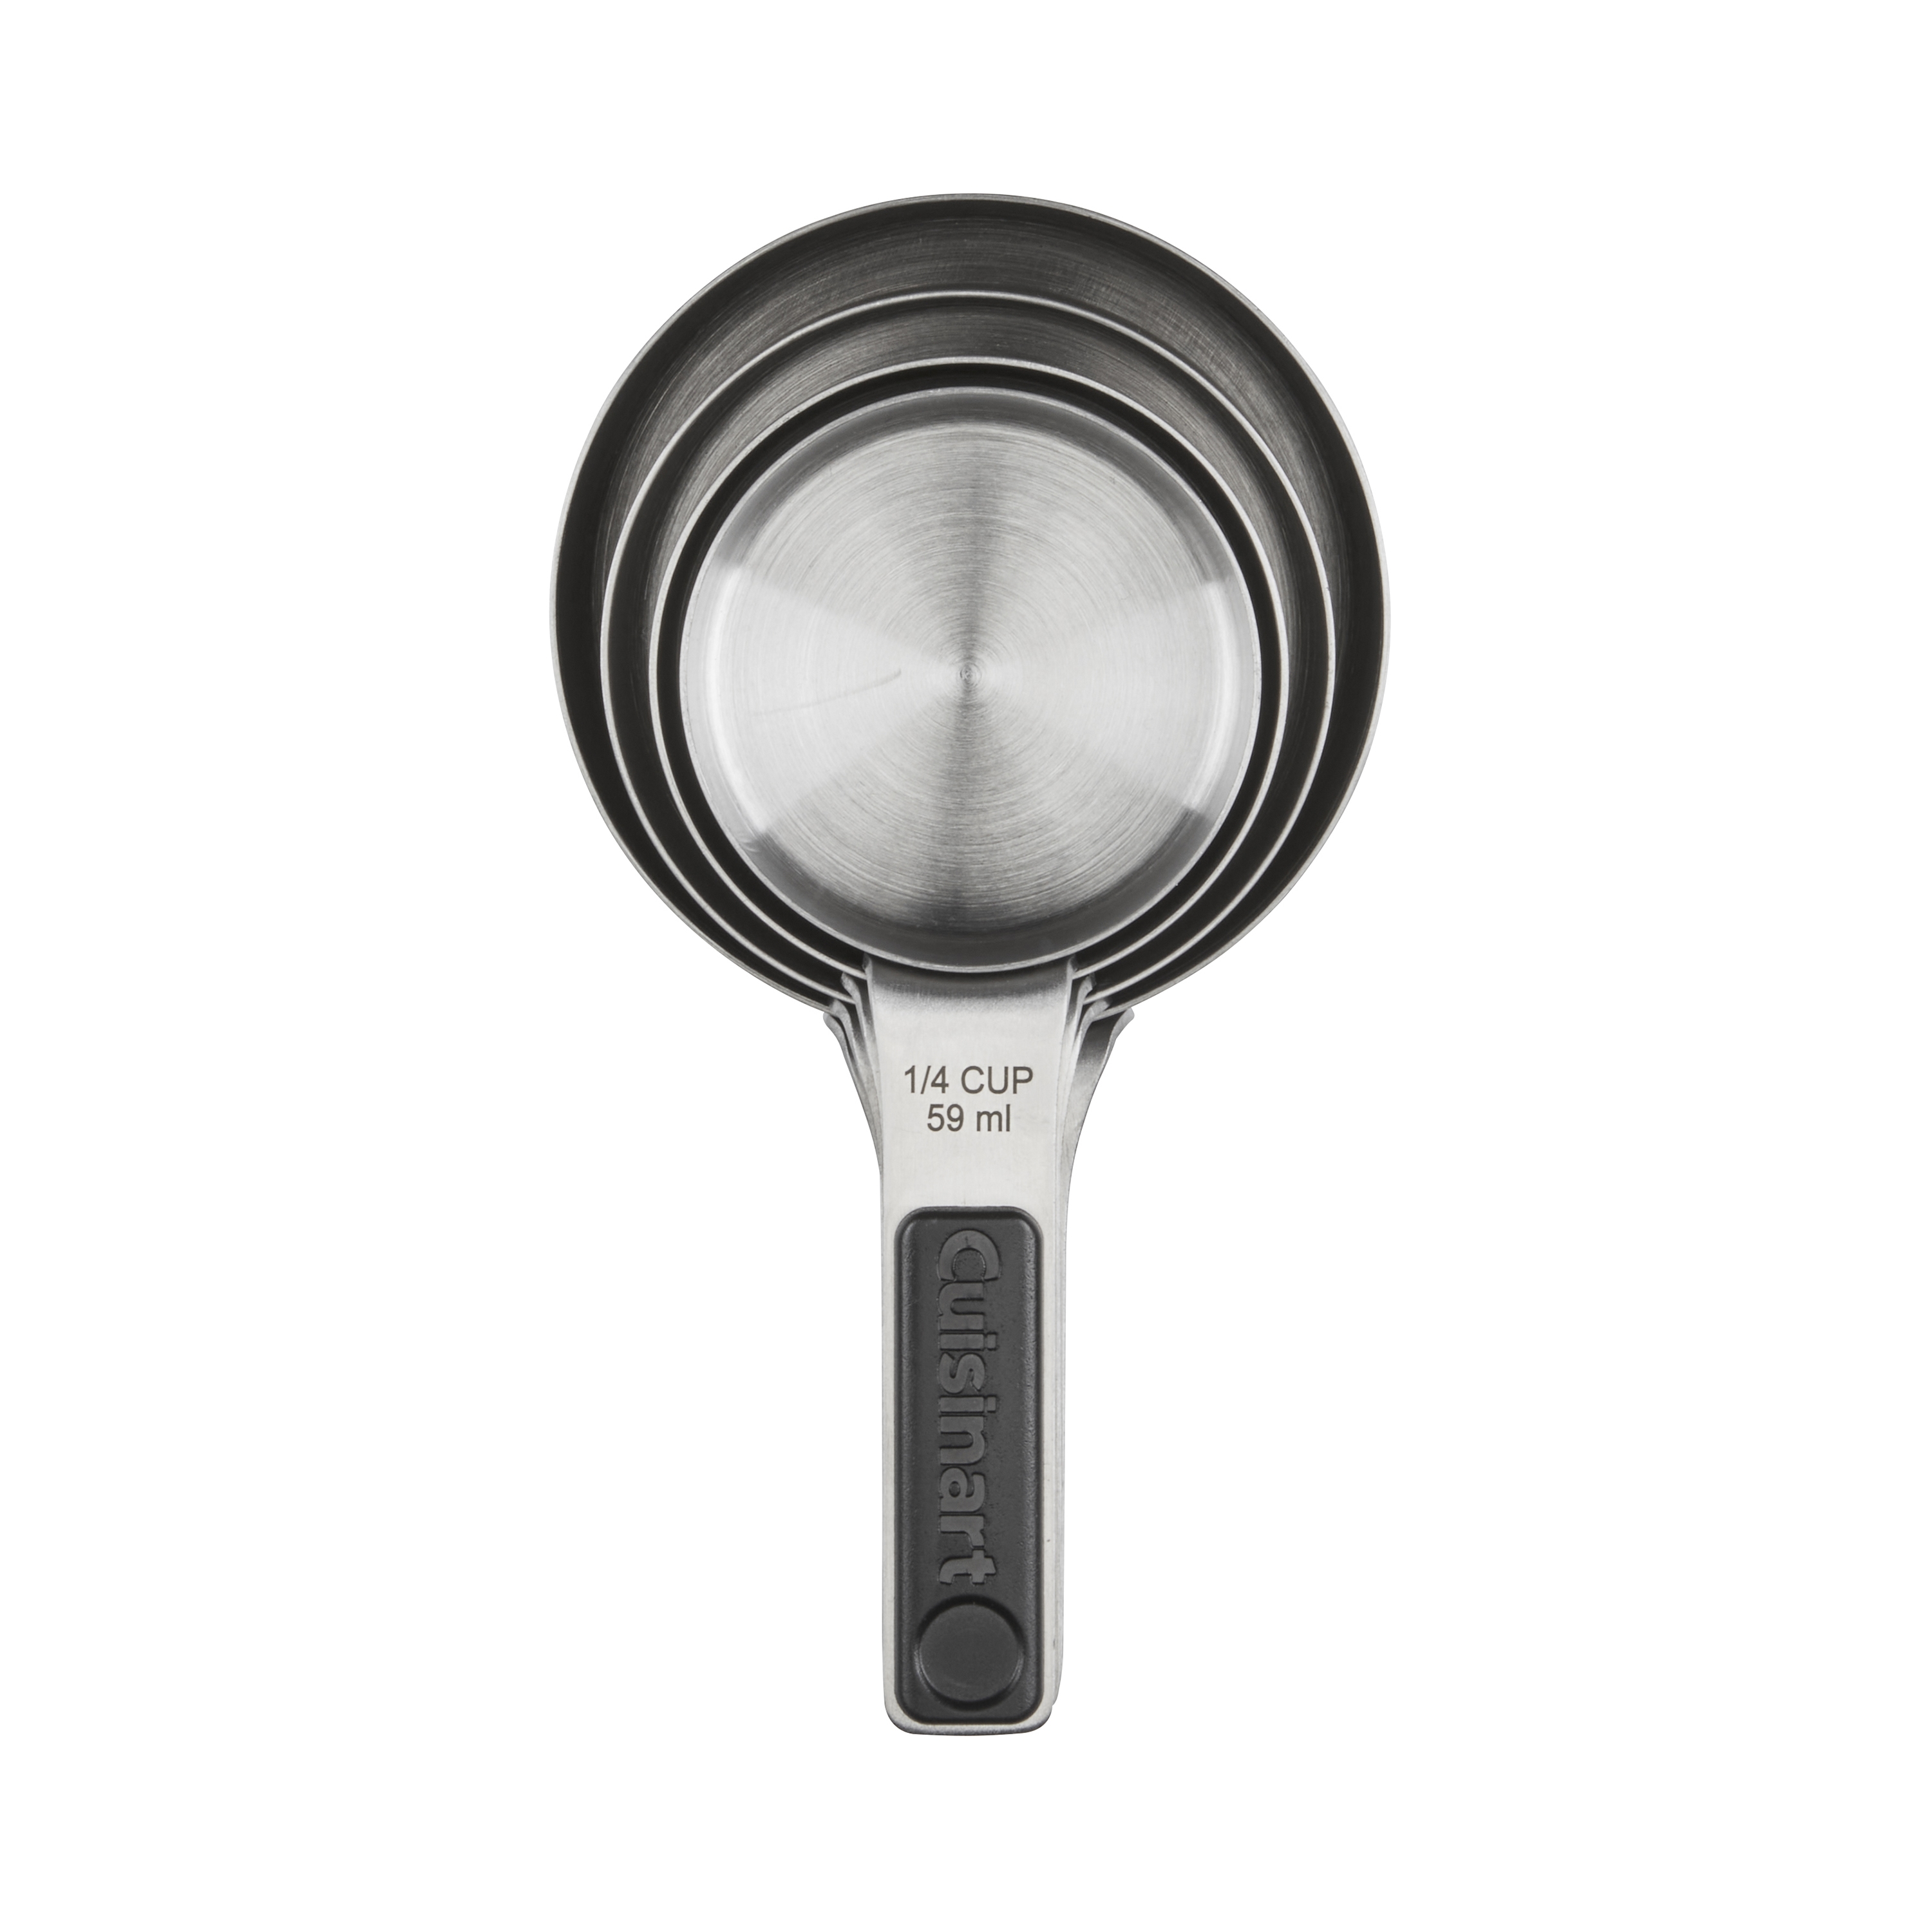 Cuisinart Stainless Steel Measuring Spoons Set